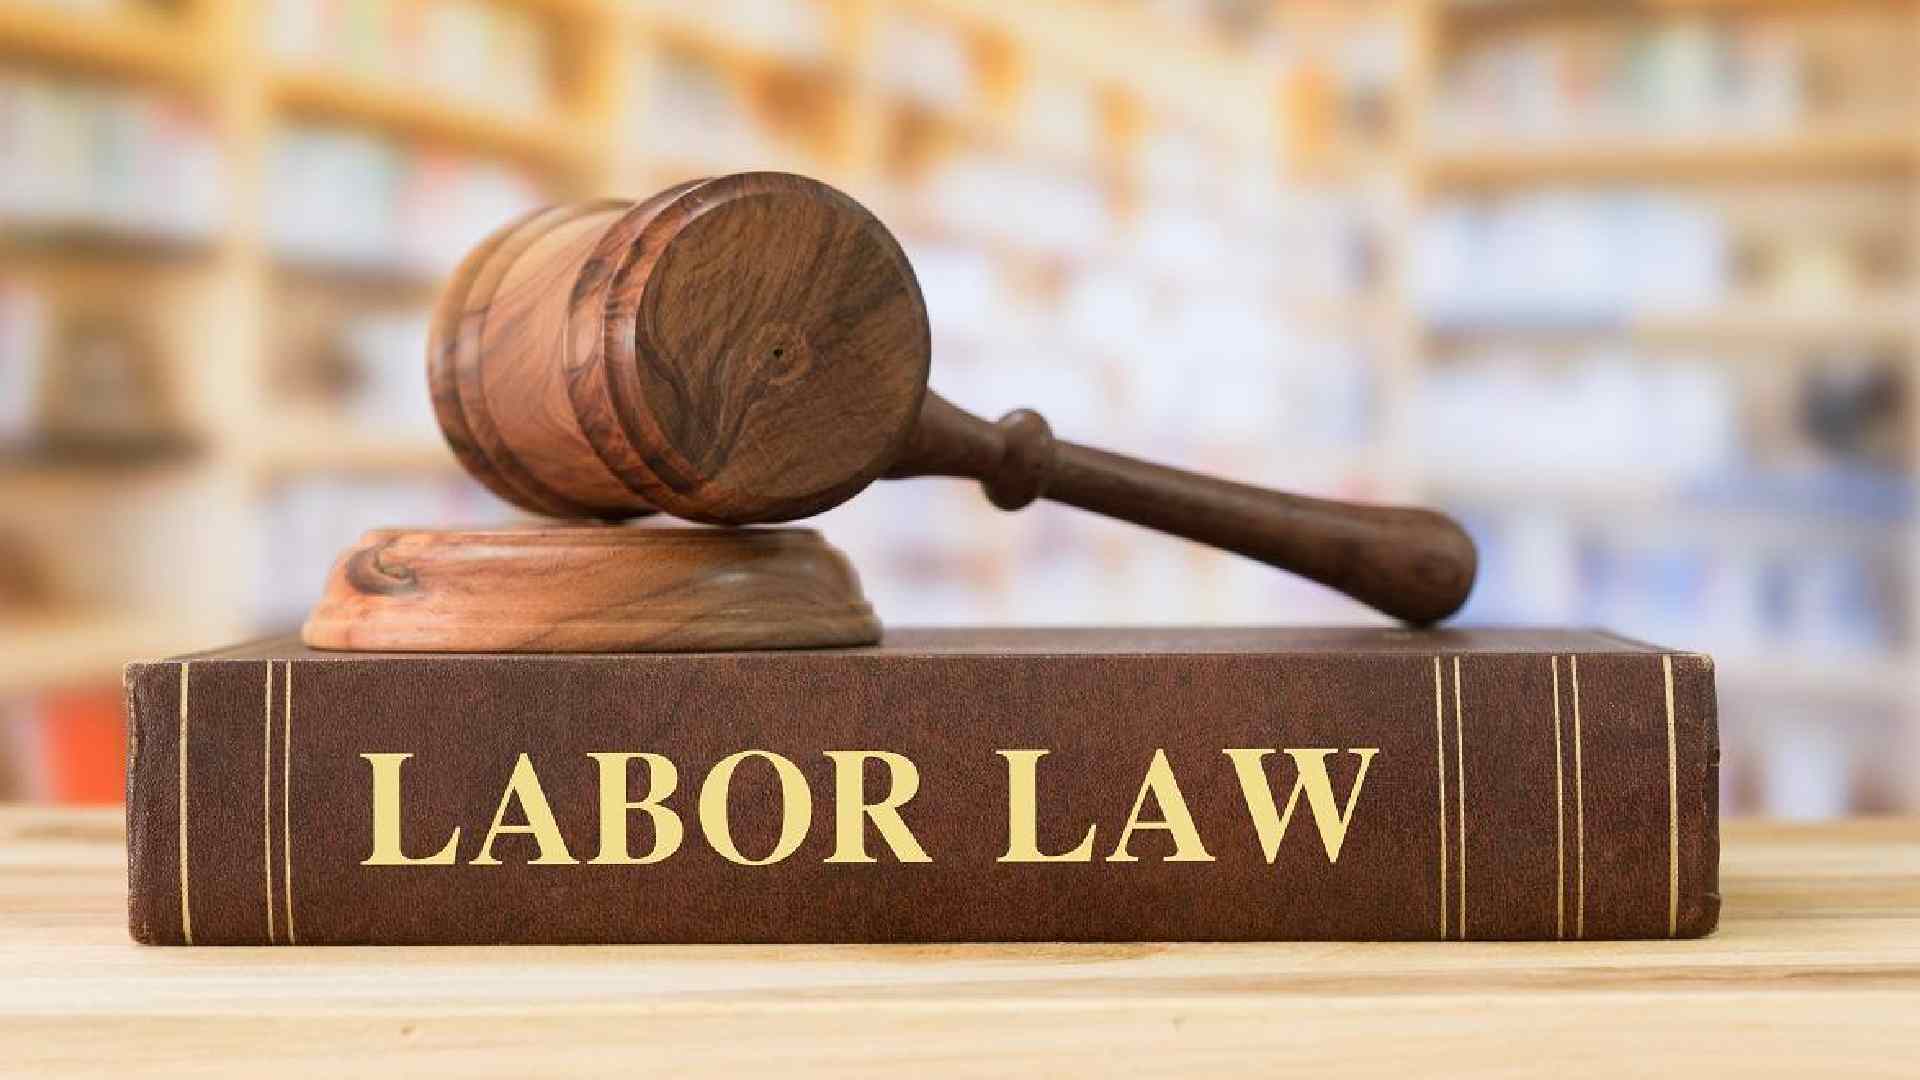 labor-law